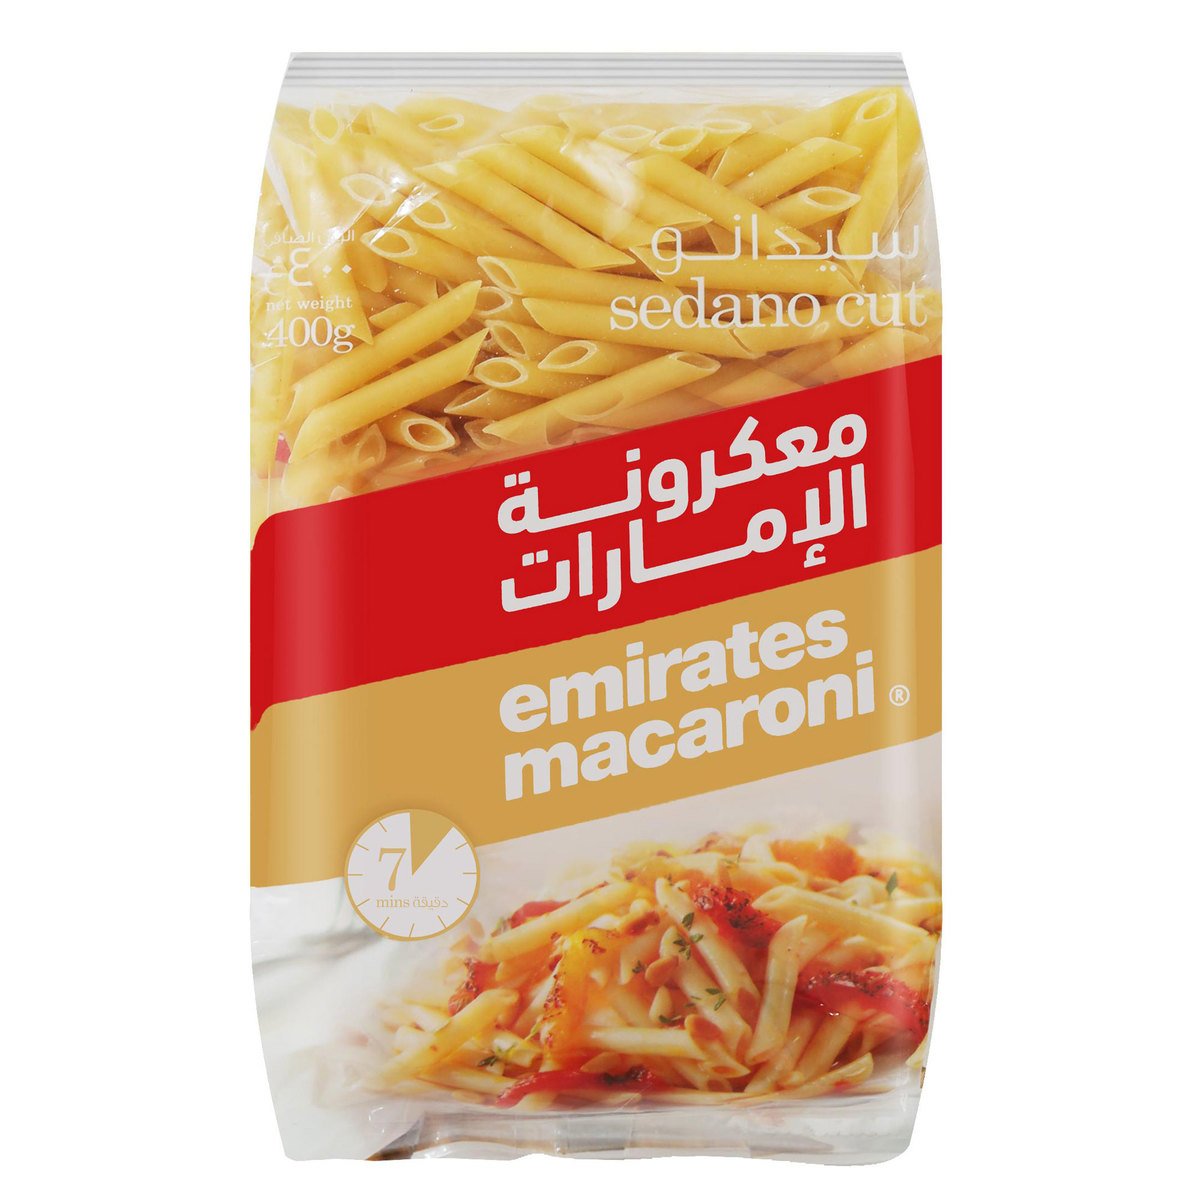 Emirates Macaroni Sedano Cut 400 g